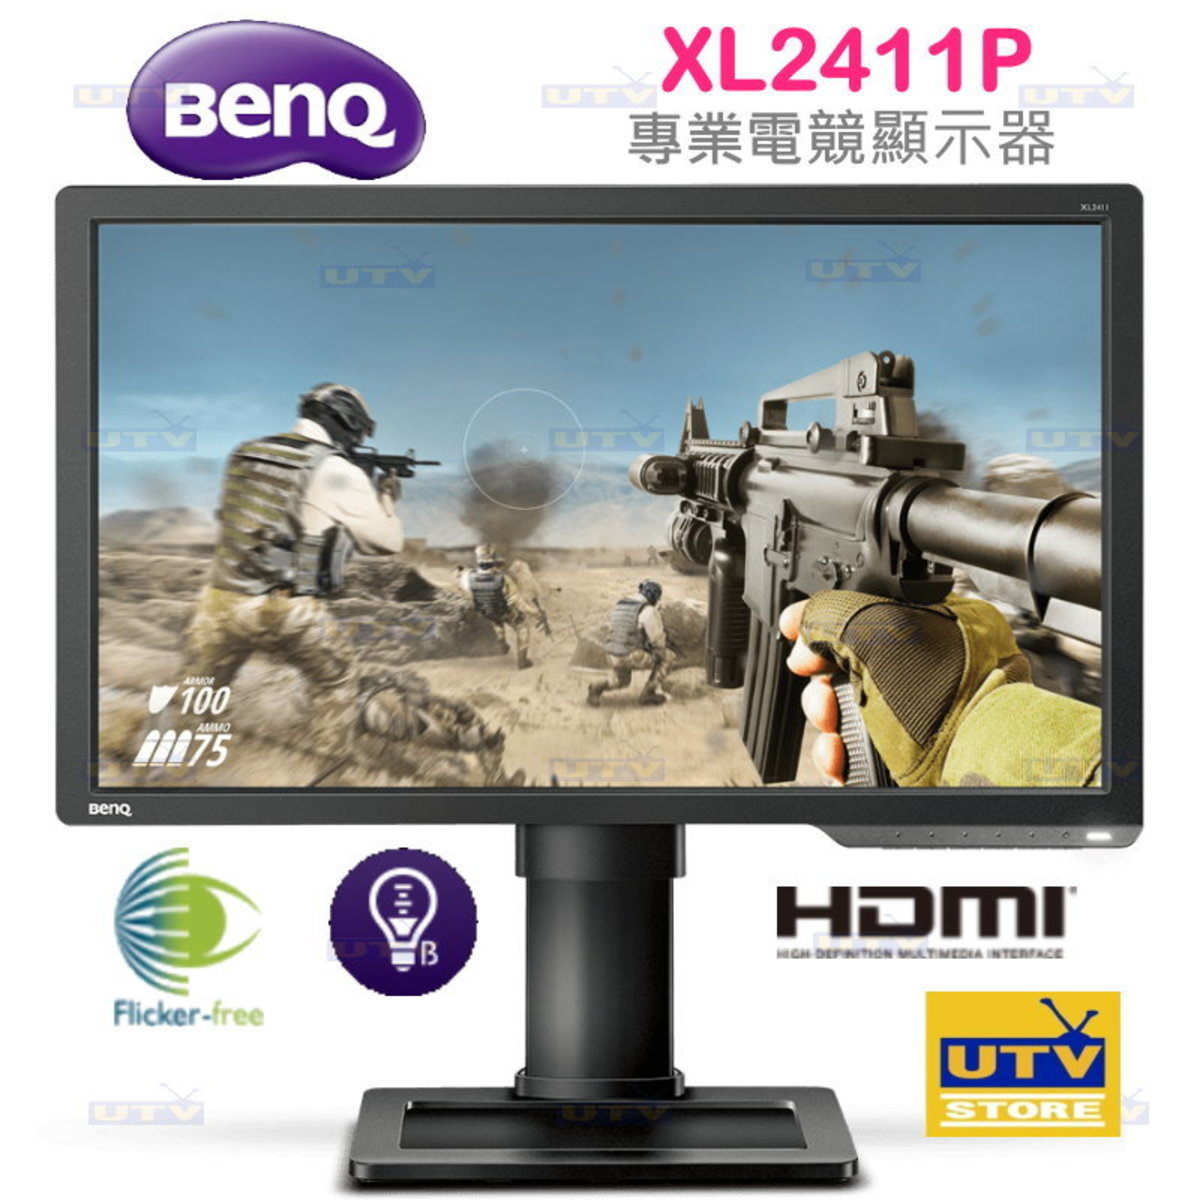 Benq Xl2411p 24 Zowie專業電竸顯示器 Hktvmall 香港最大網購平台